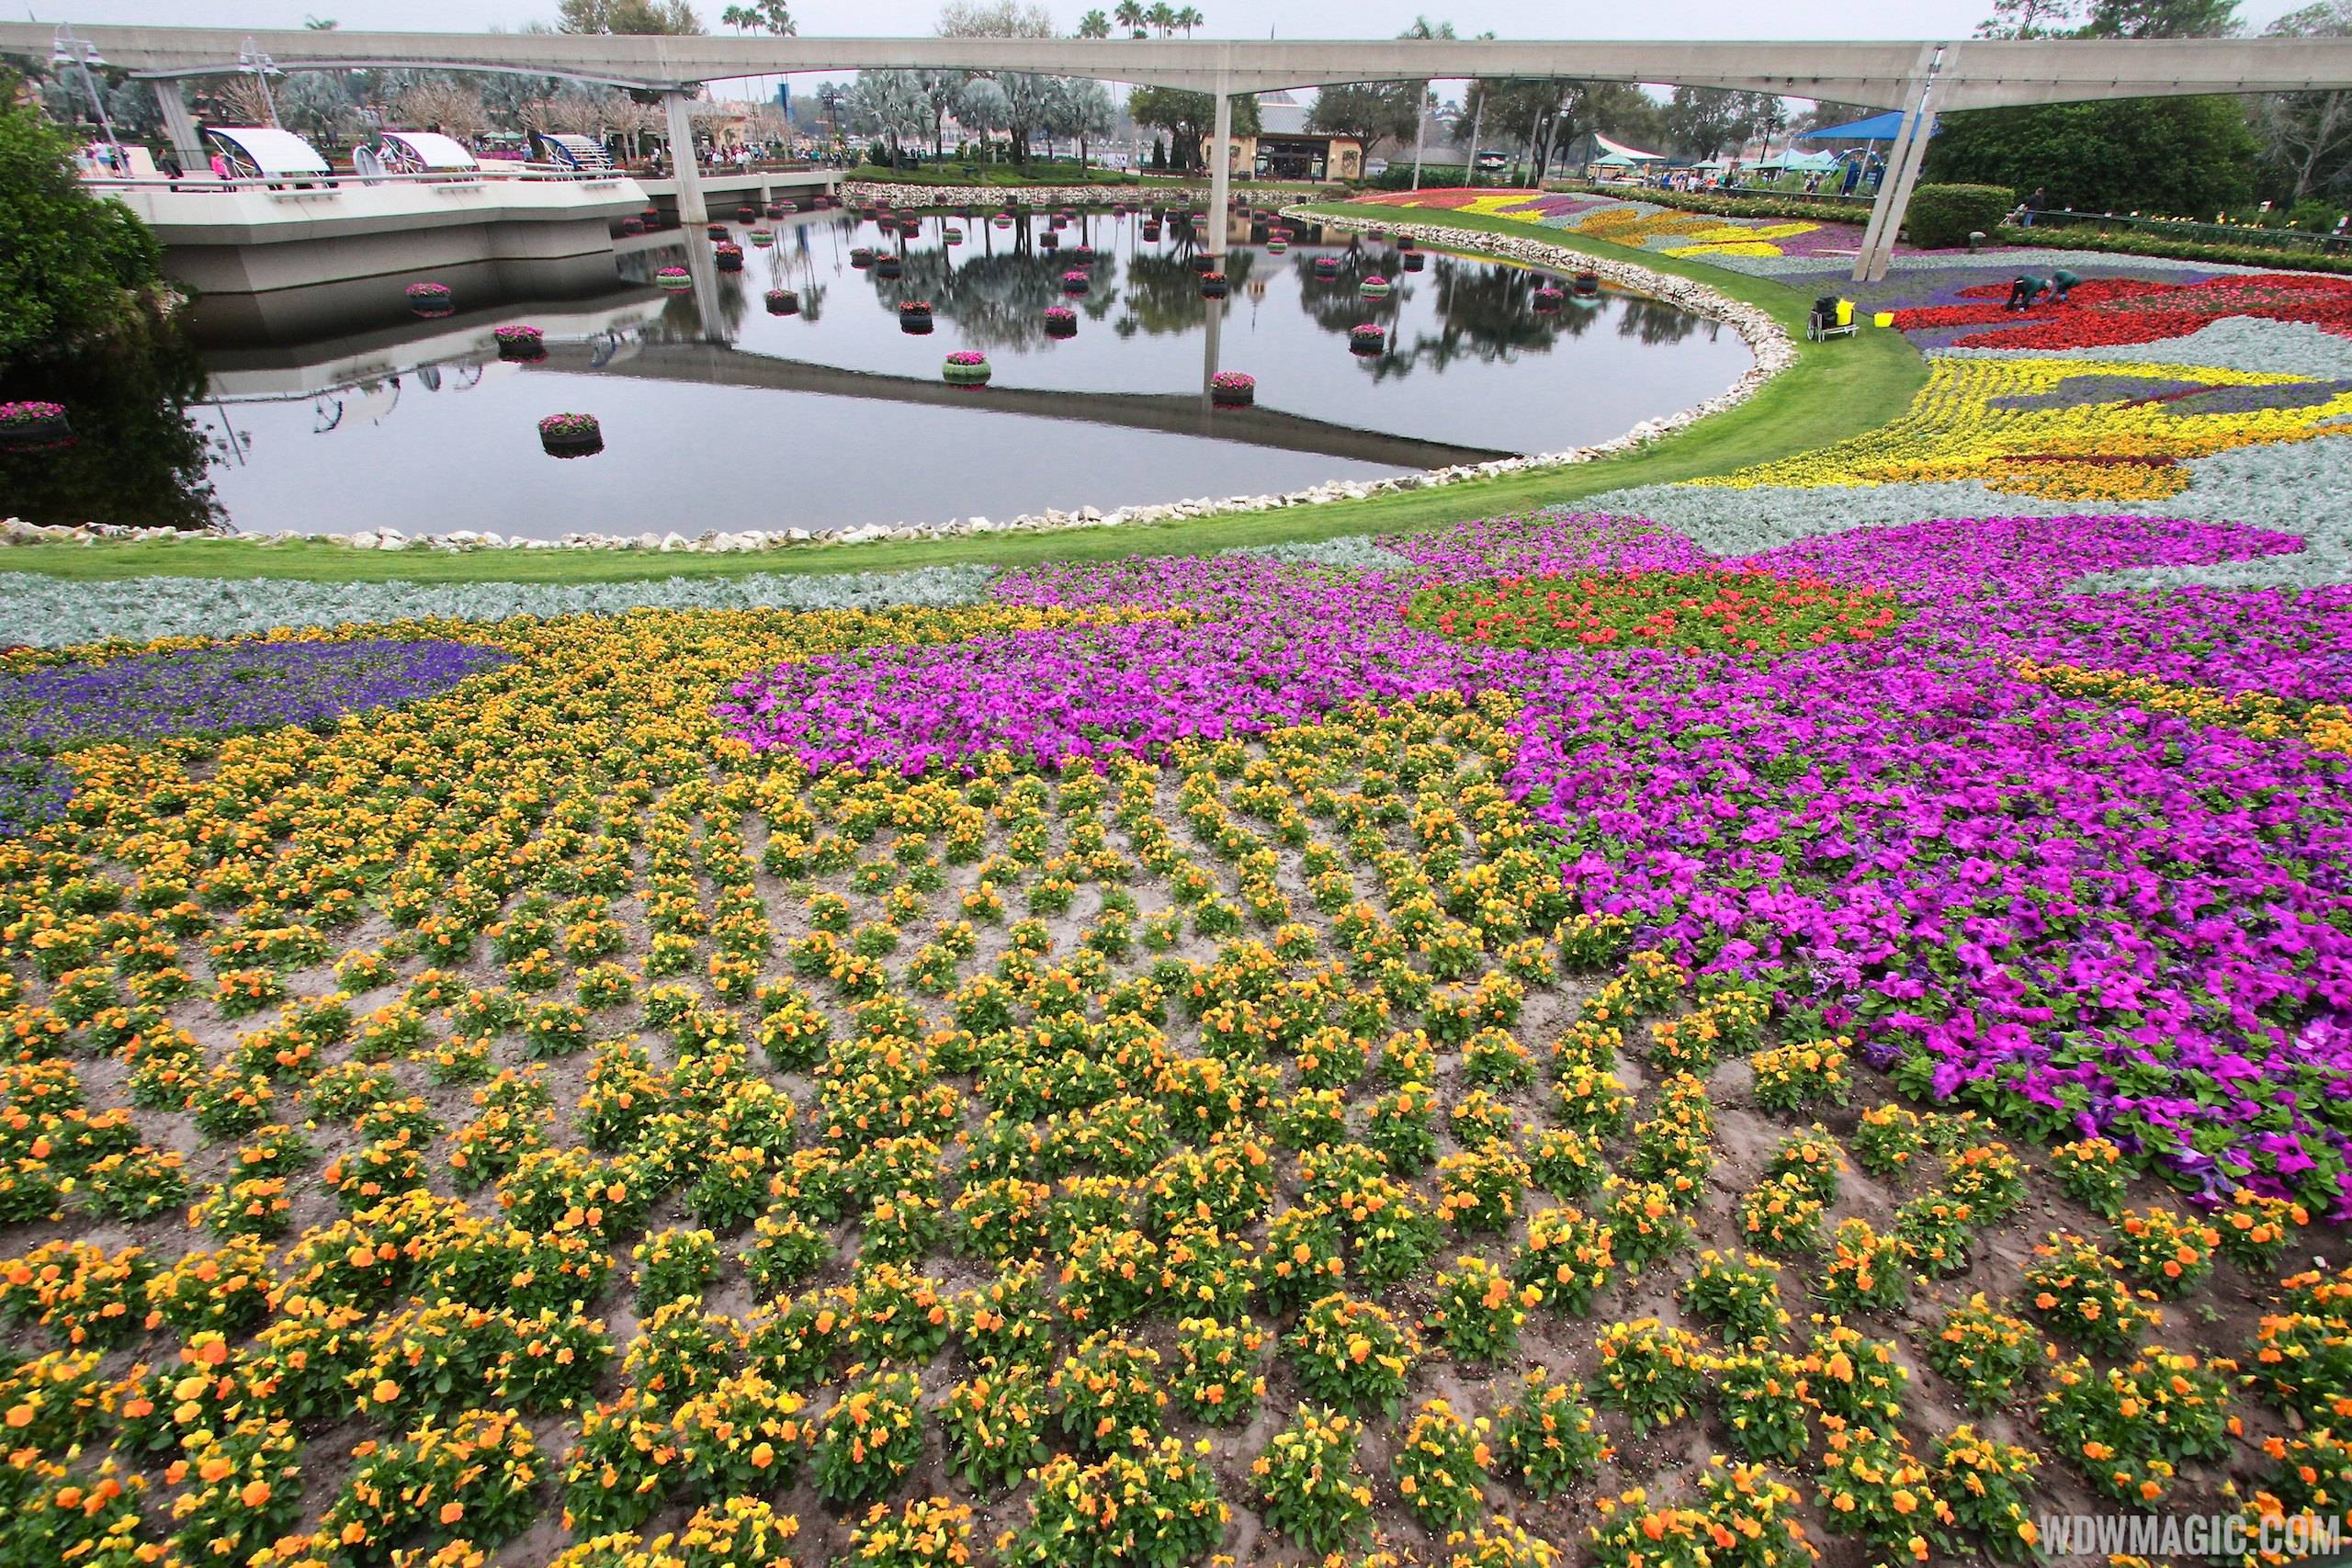 2014 Epcot Flower and Garden Festival - Future World gardens